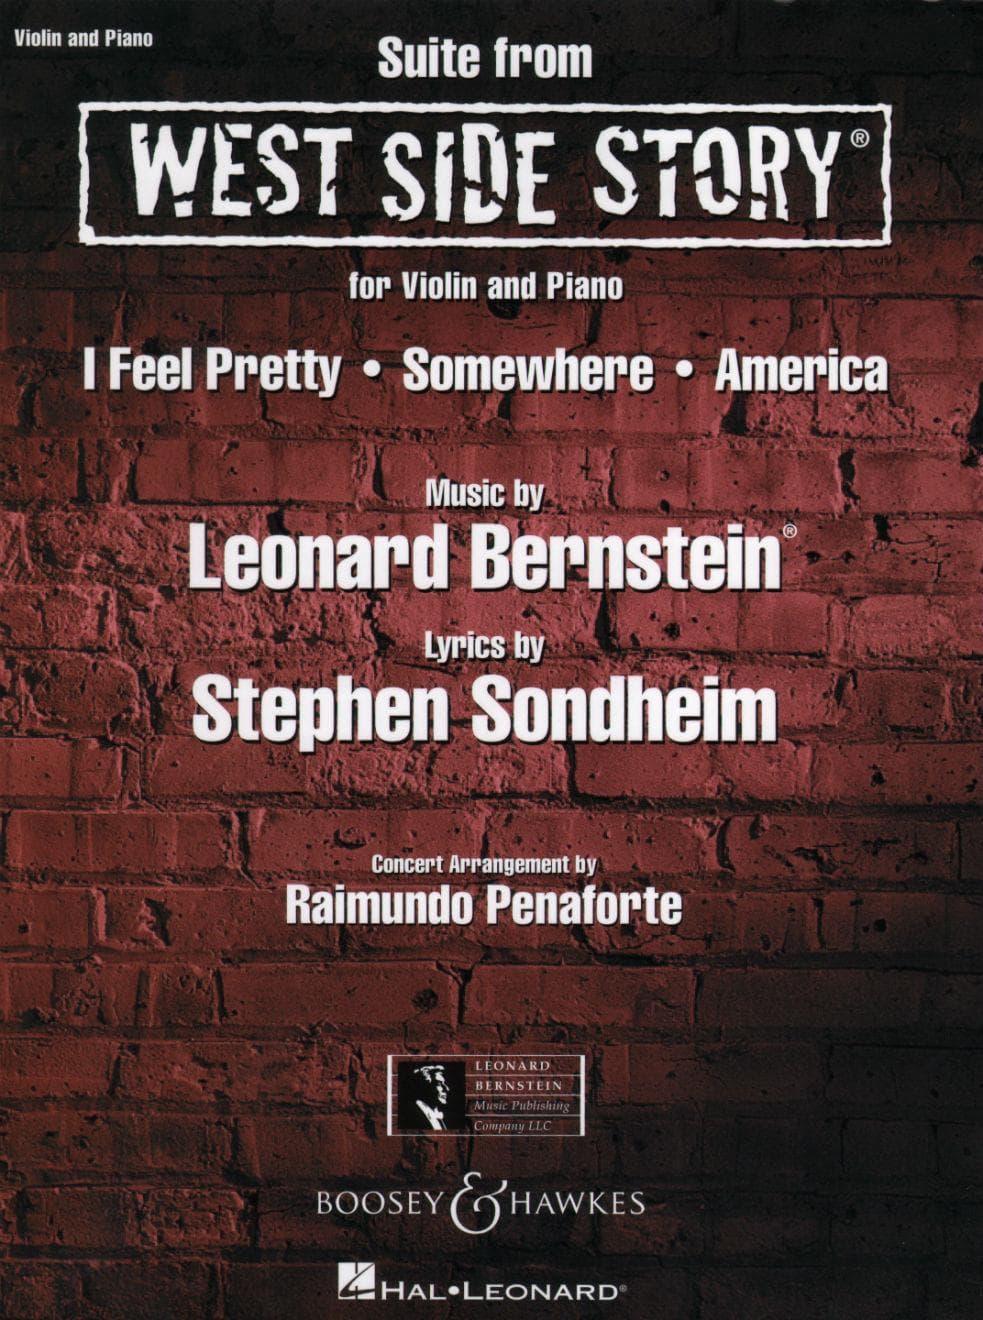 Bernstein, Leonard - Suite from "West Side Story" for Violin Piano - arranged by Raimundo Penaforte - Leonard Bernstein Music Publishing Co